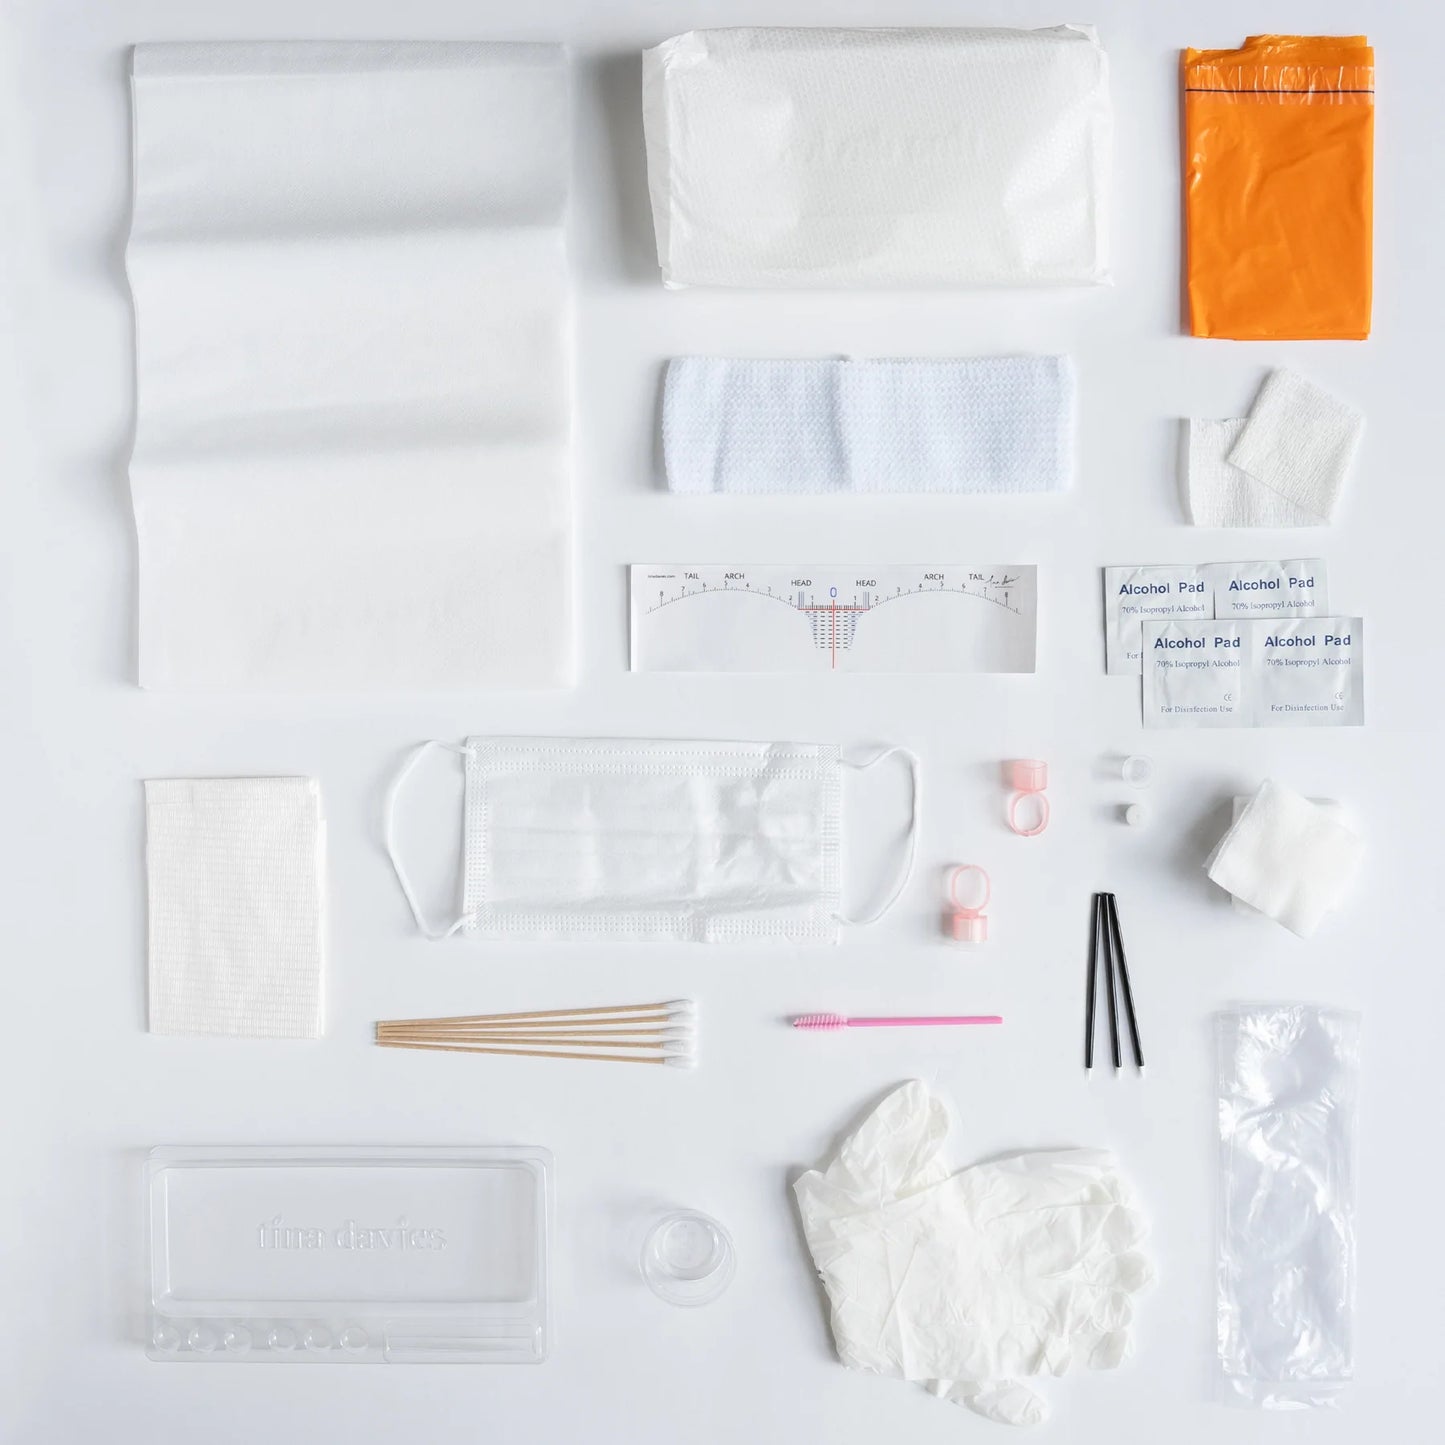 Disposable Sterile Kit